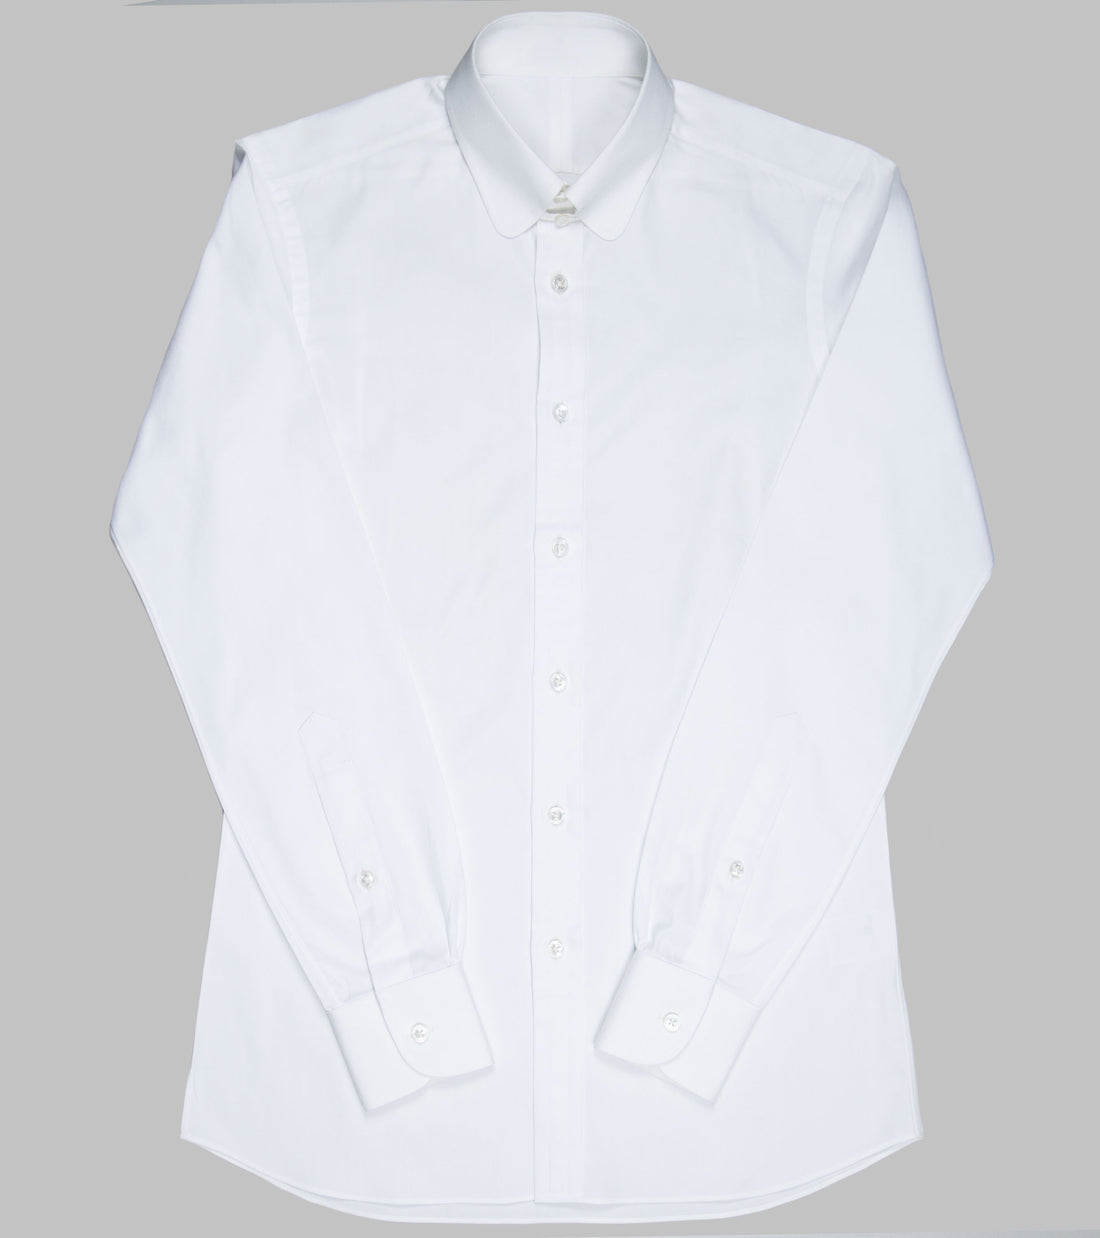  Bryceland's Club Tab Collar Shirt White